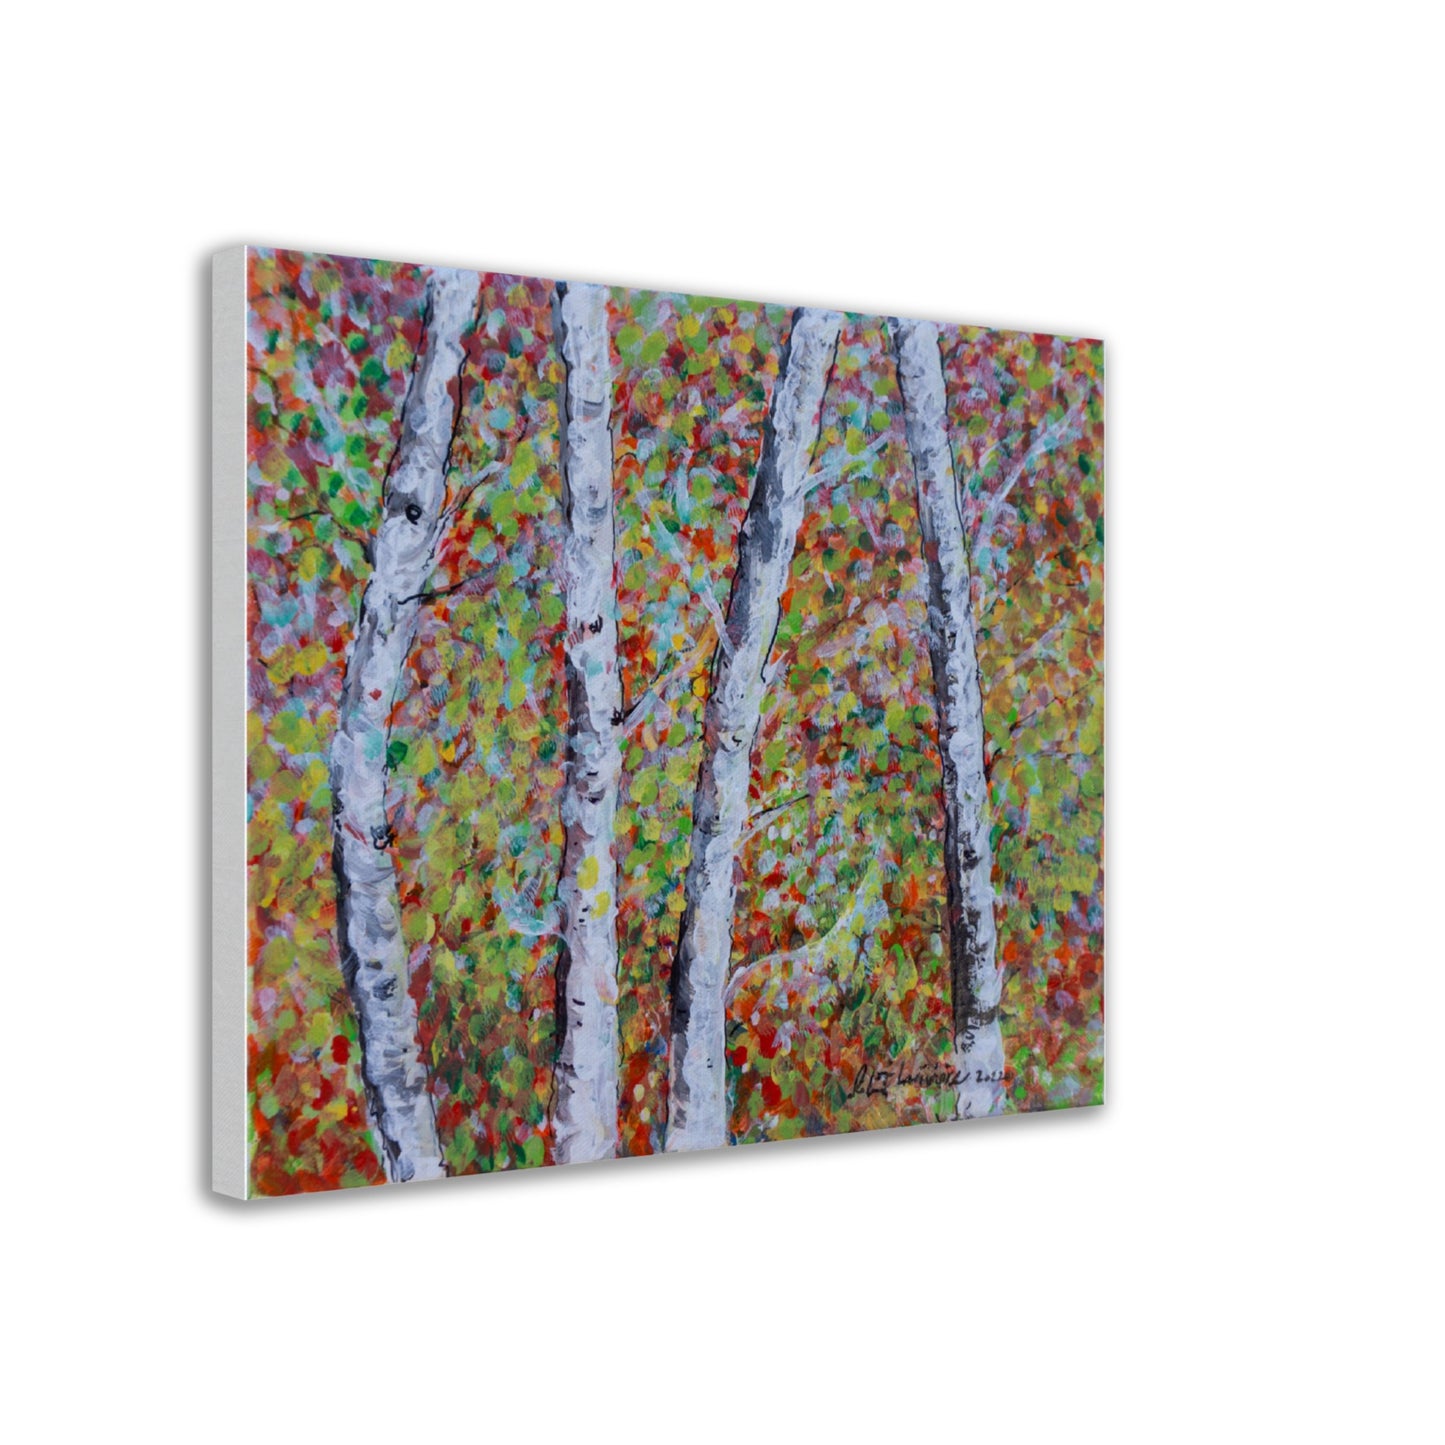 Fall Birch Trees - Canvas